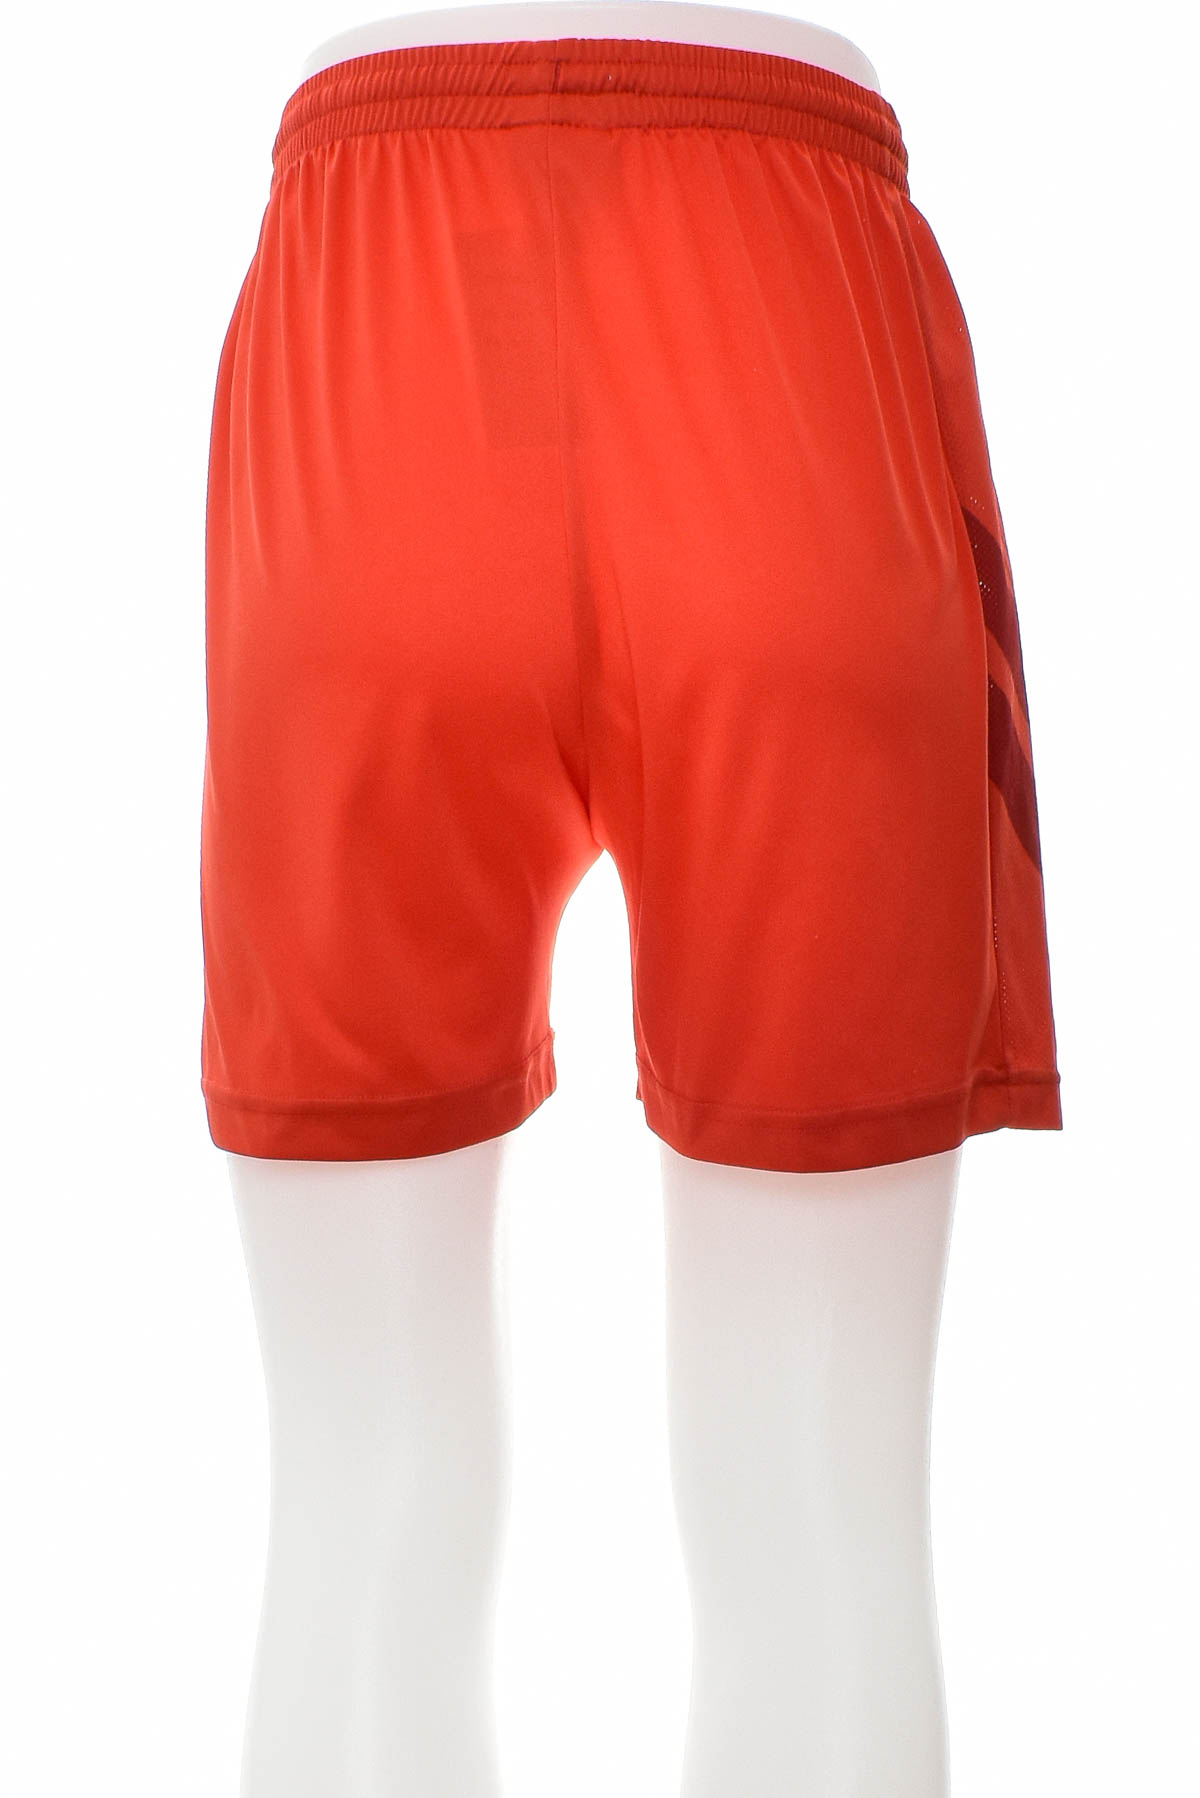 Men's shorts - PATRICK - 1